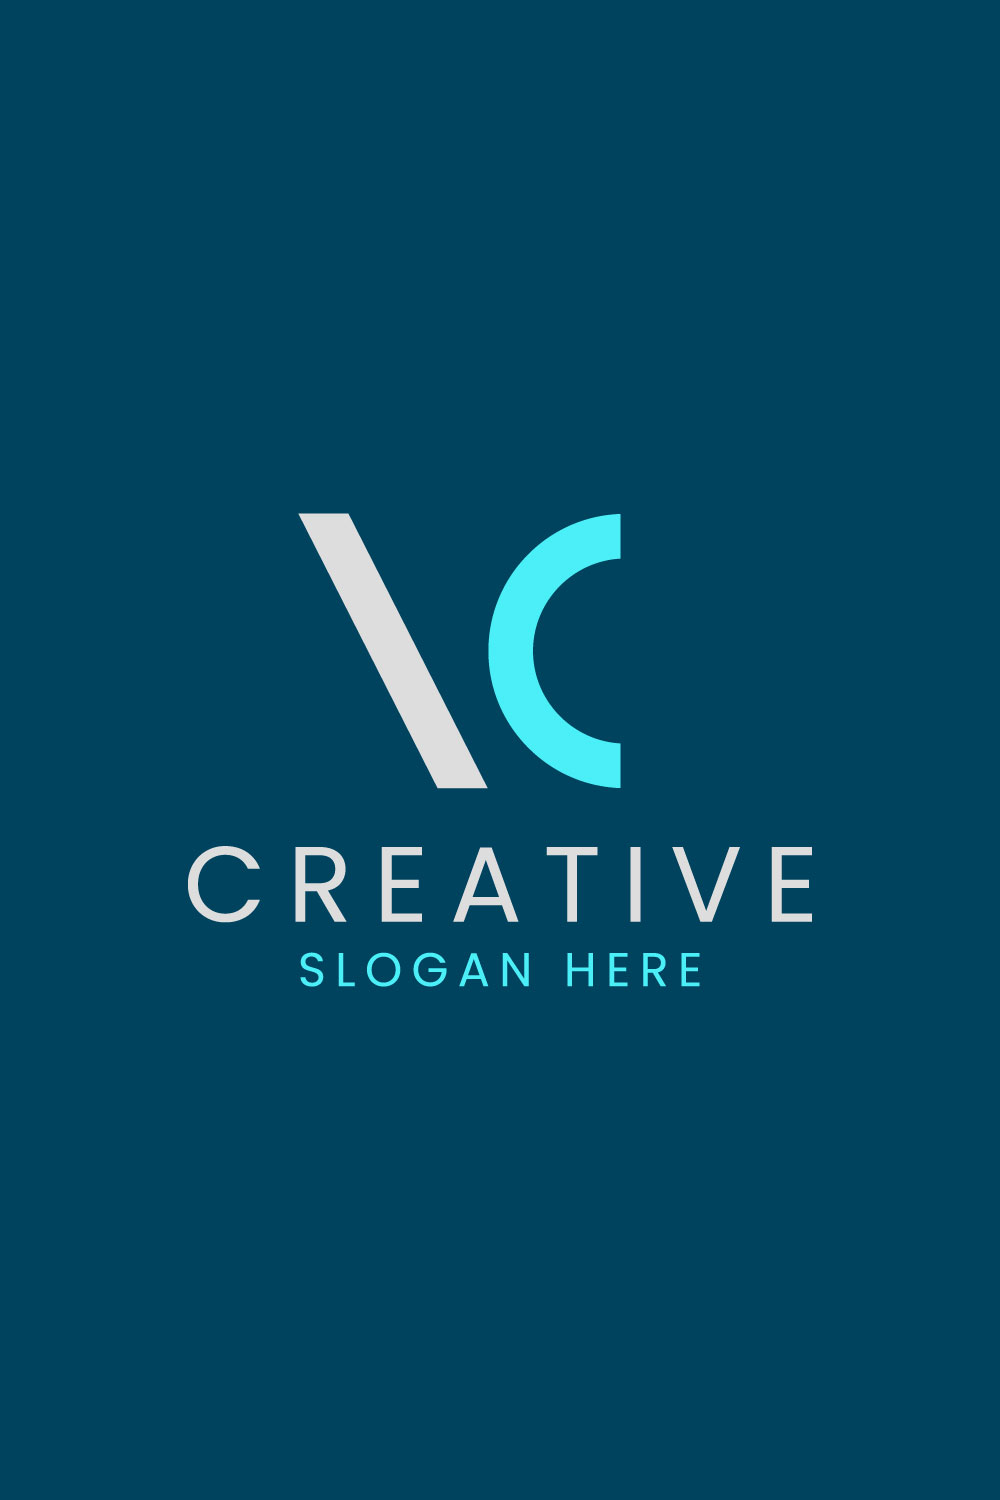 Creative Letter VC Logo Design Vector Image pinterest preview image.